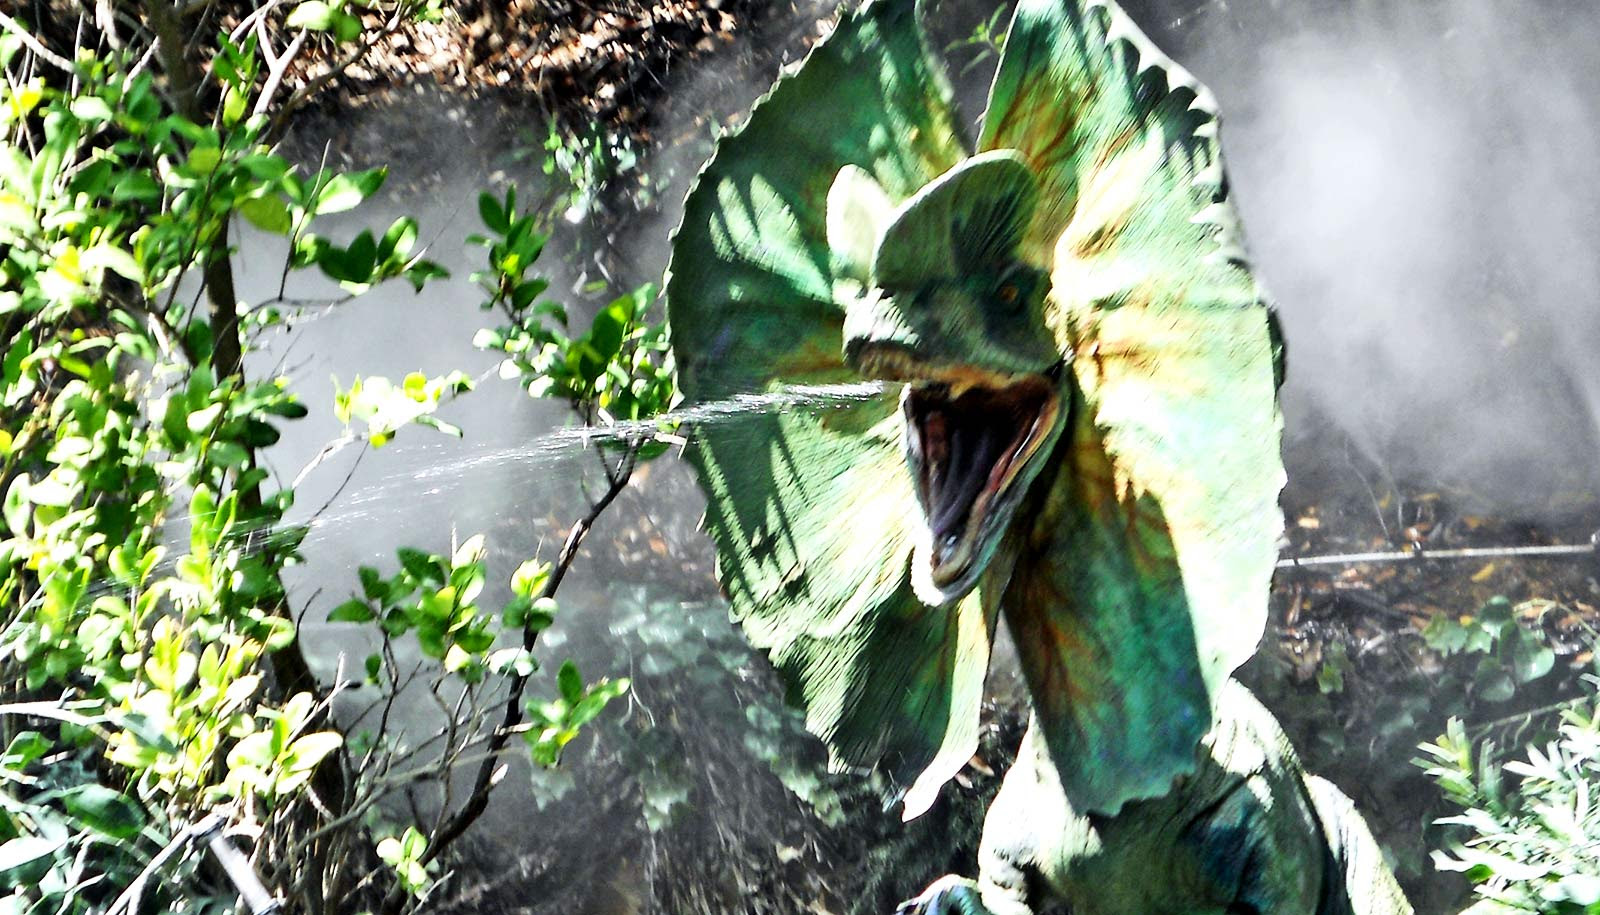 Venomspitting dinosaur wasn't actually like 'Jurassic Park' Futurity